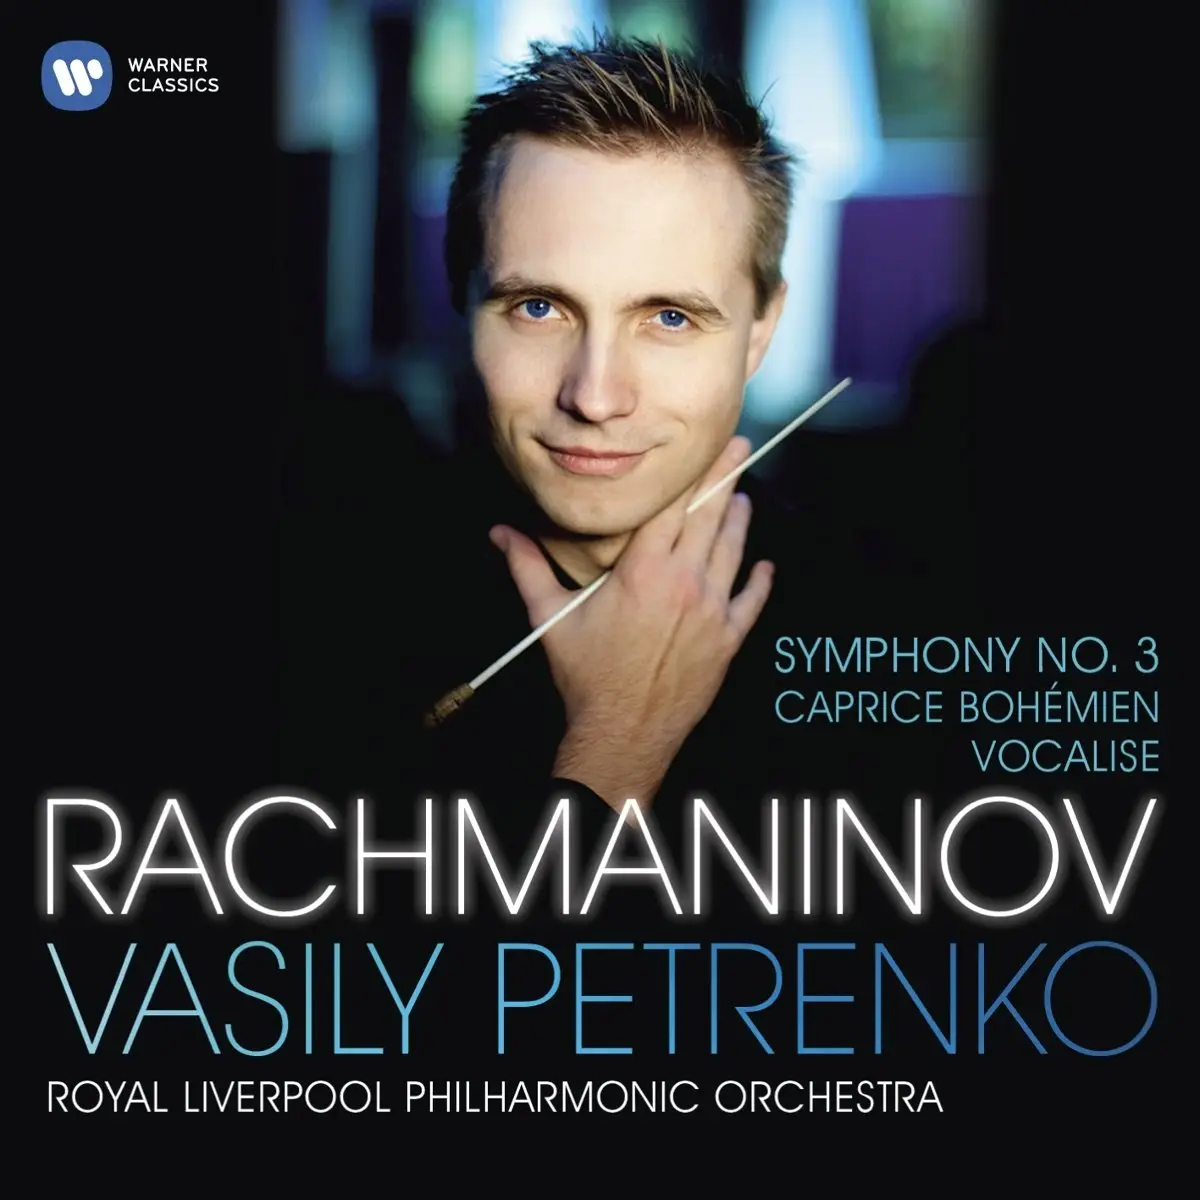 Vasily Petrenko, Royal Liverpool Philharmonic Orchestra - Rachmaninov: Symphony 3, Caprice Bohemien, Vocalese (2012) [Japan 2014] SACD ISO + DSF DSD64 + Hi-Res FLAC